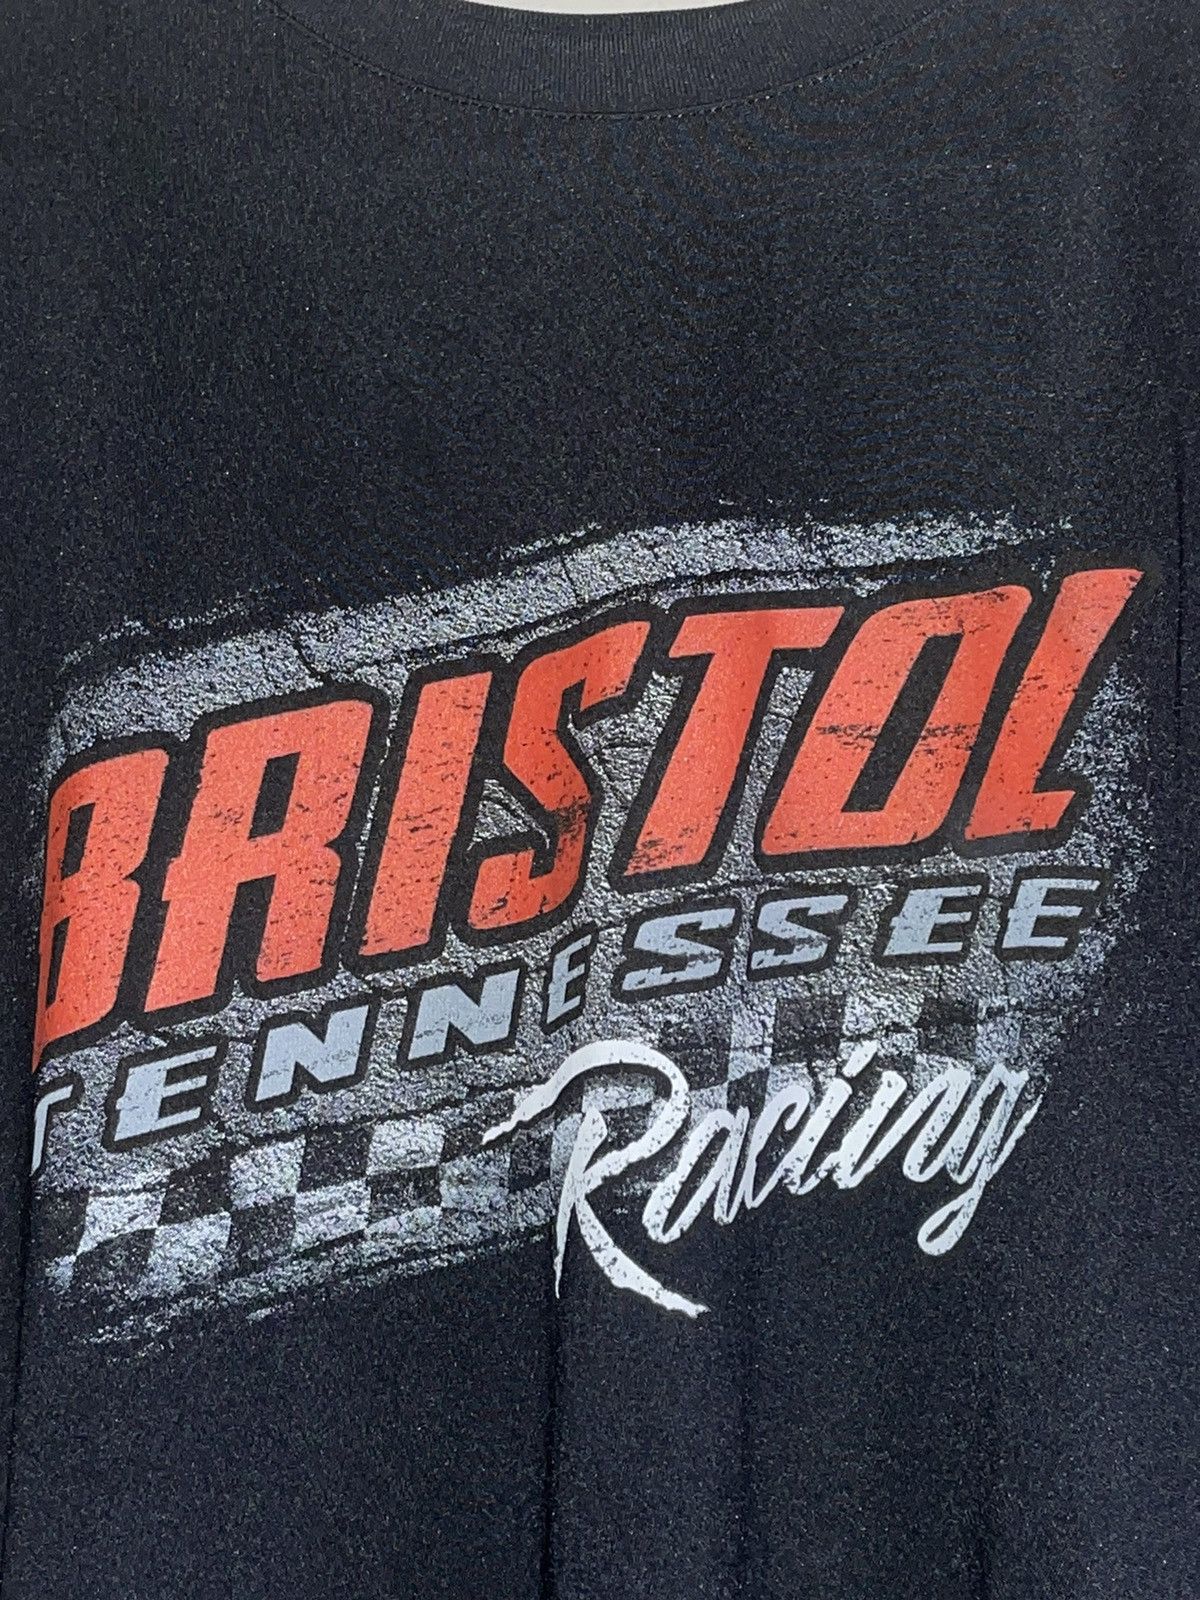 Gildan Bristol Tennessee Racing 2019 T Shirt Mens Size Large Gildan Size US L / EU 52-54 / 3 - 7 Thumbnail